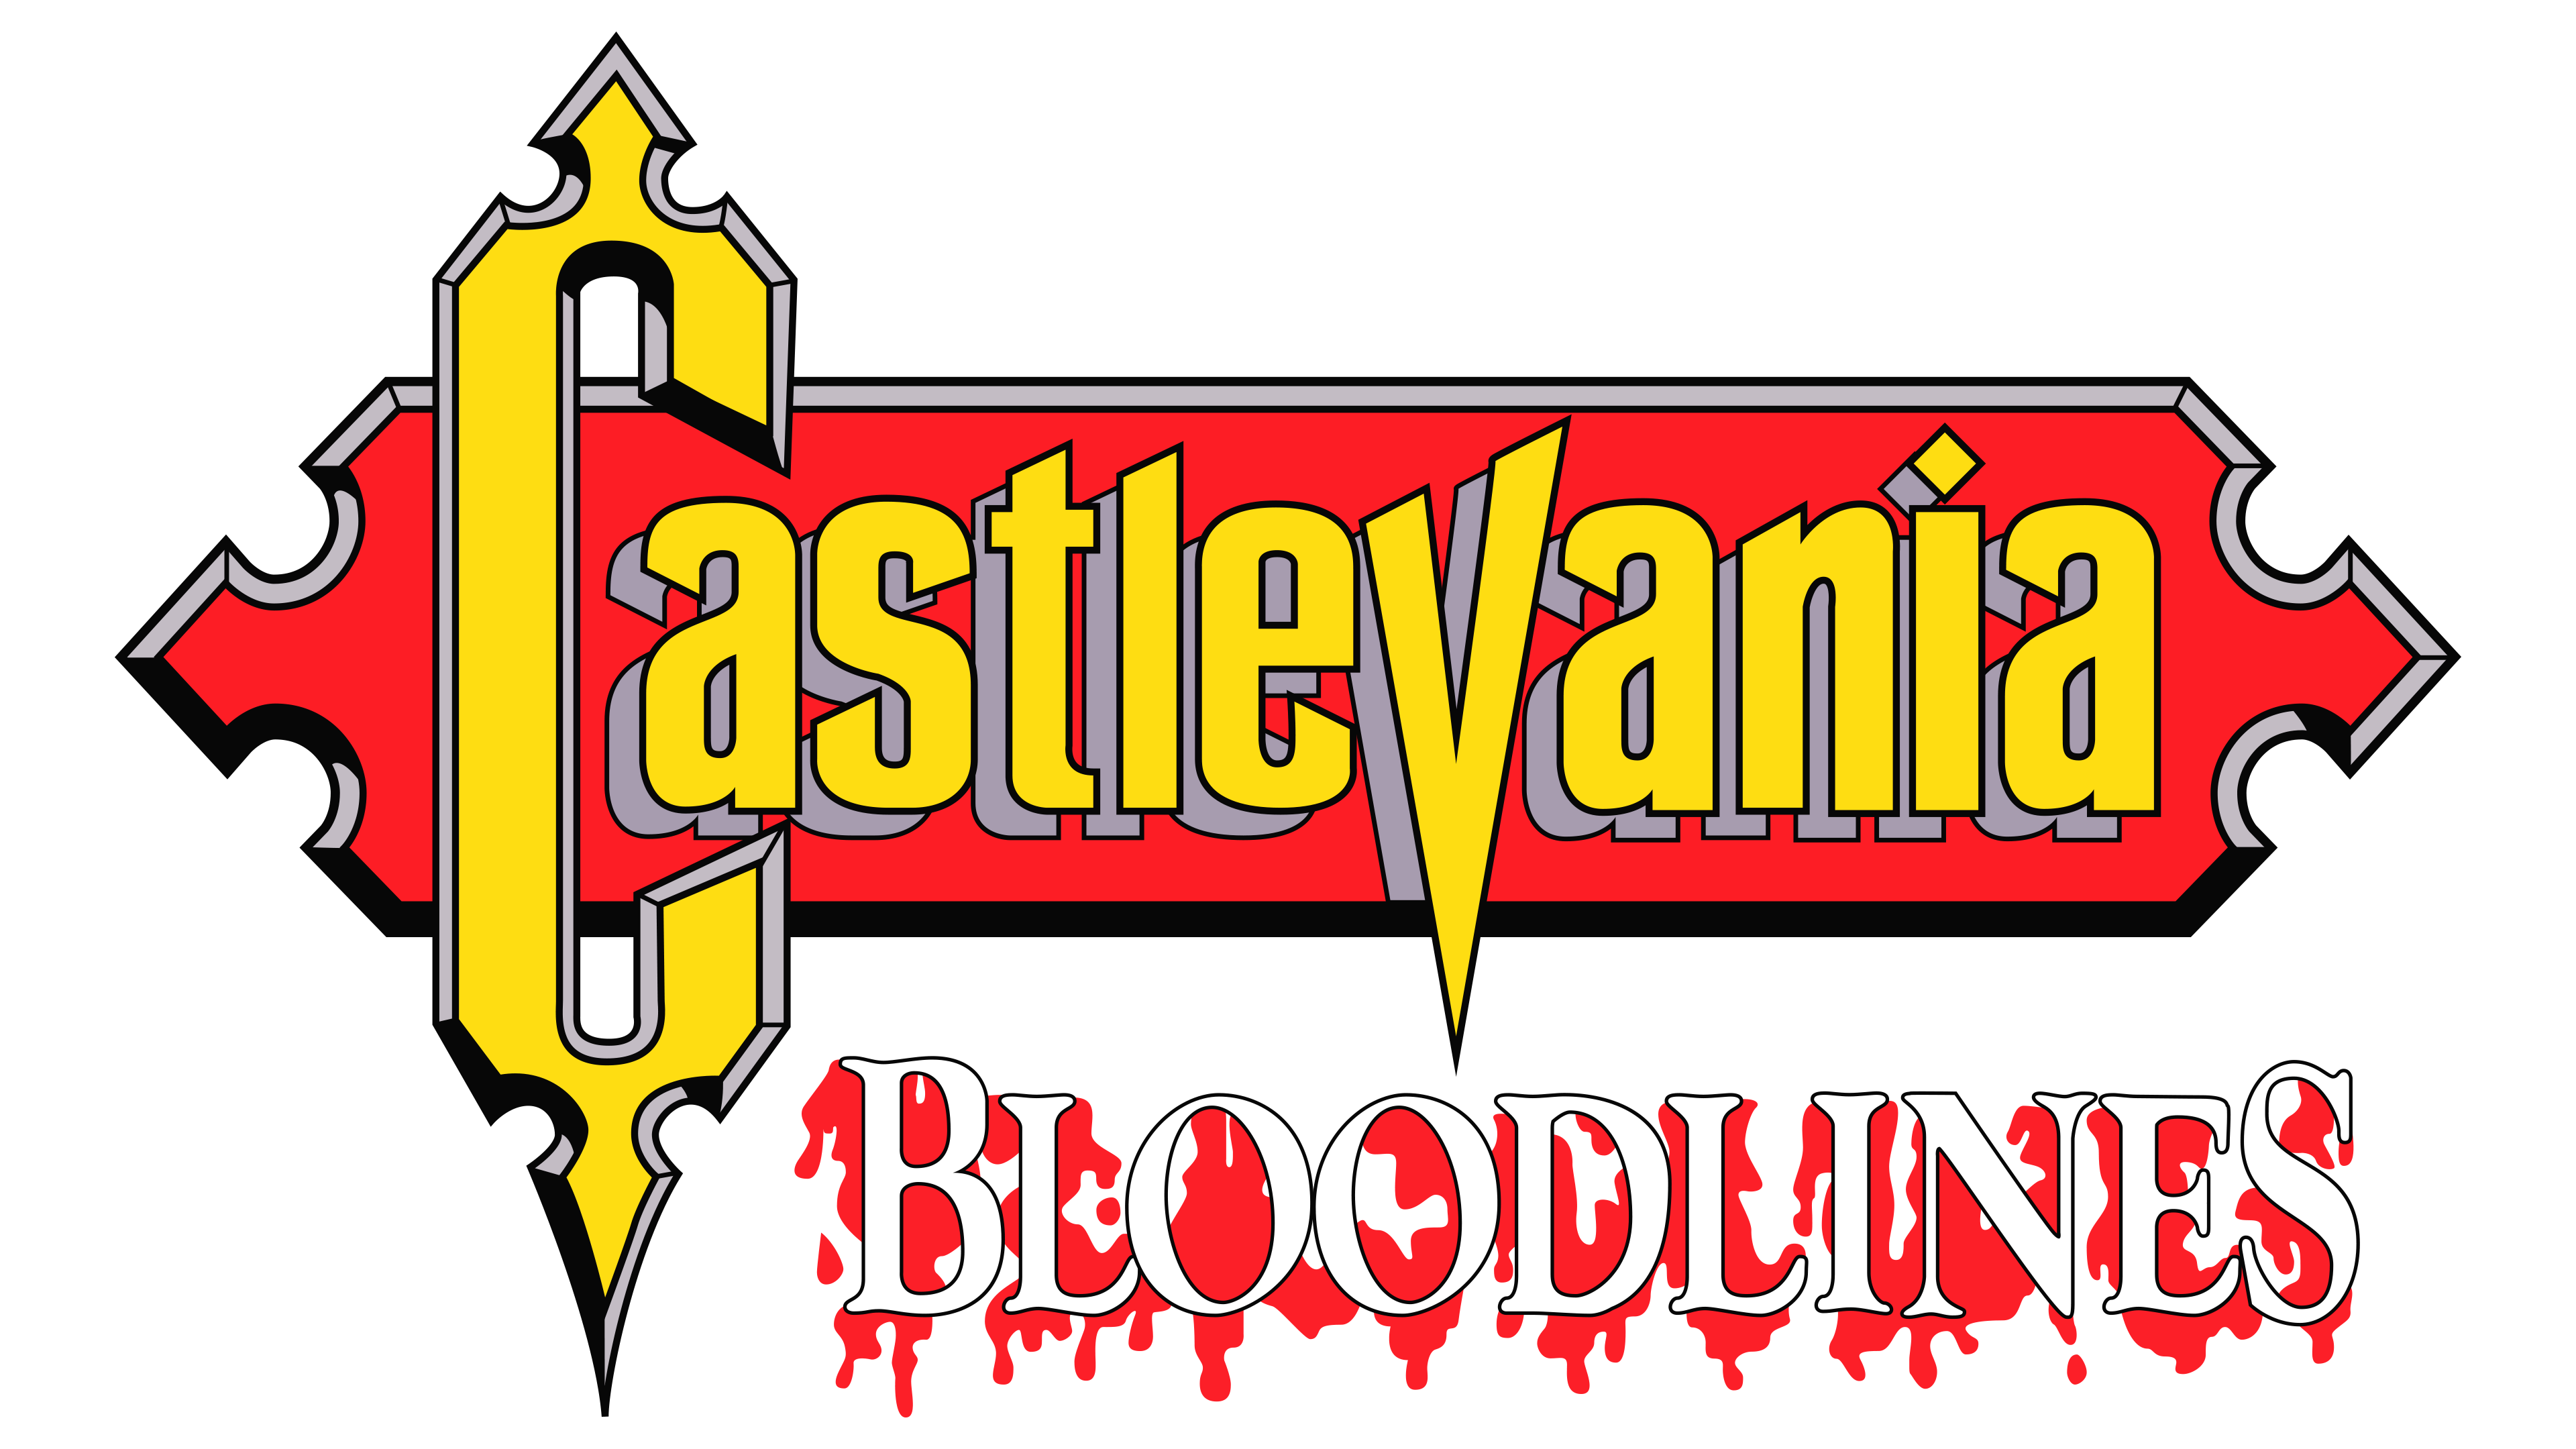 download castlevania bloodline